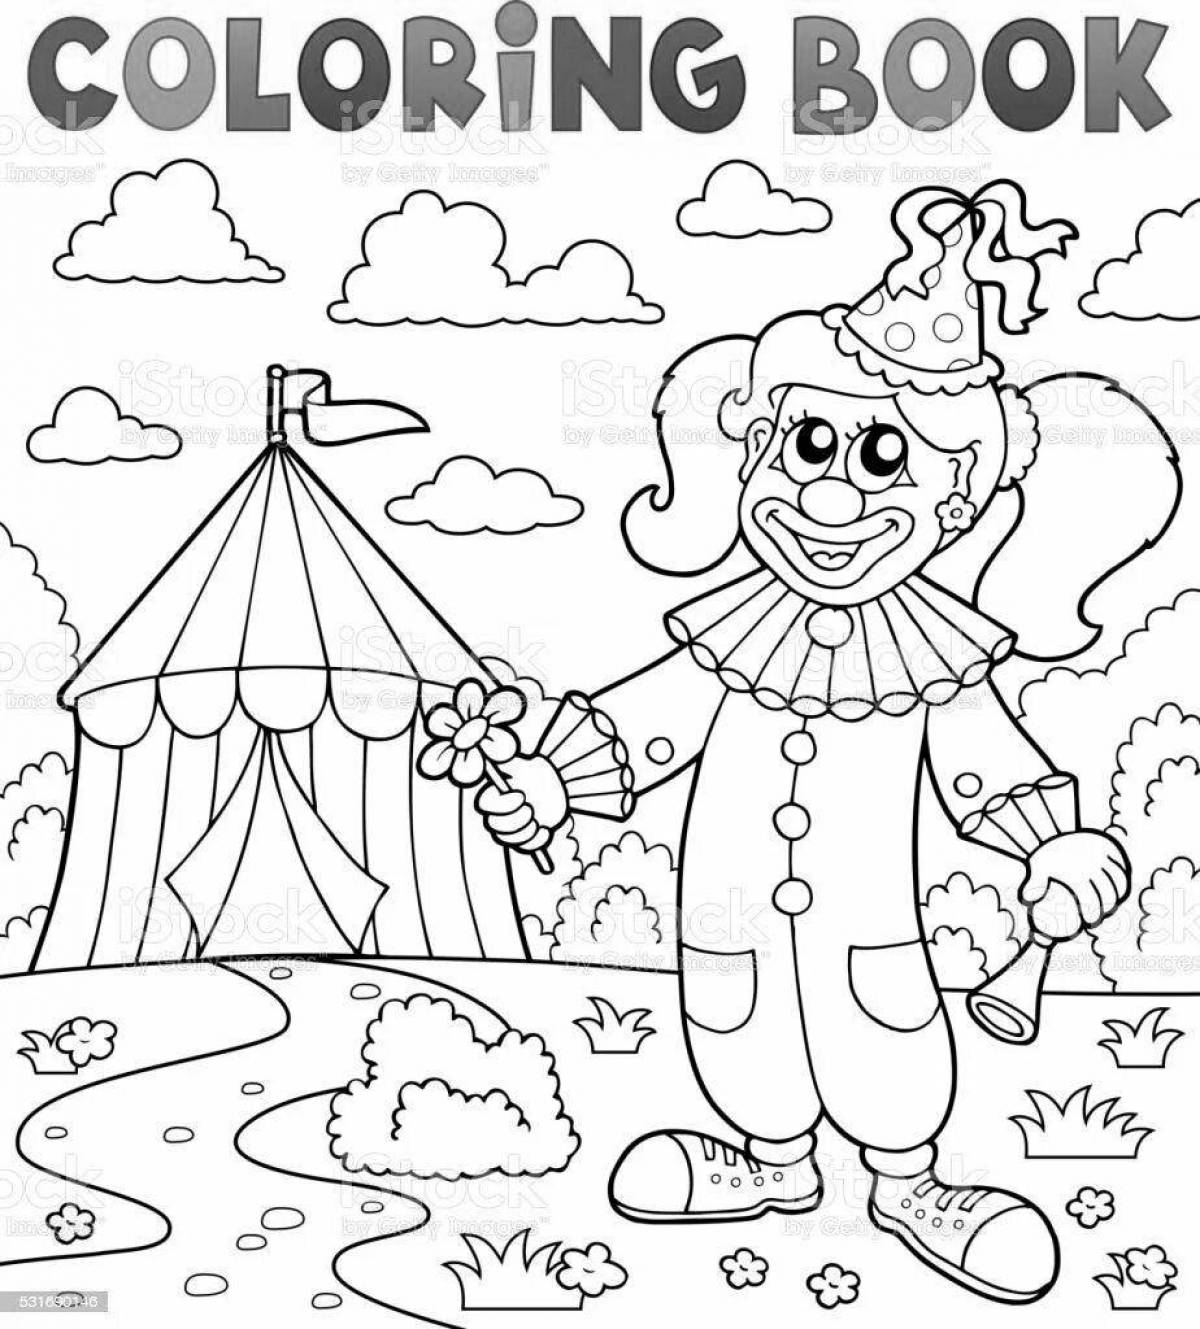 Entertaining coloring book visiting a clown